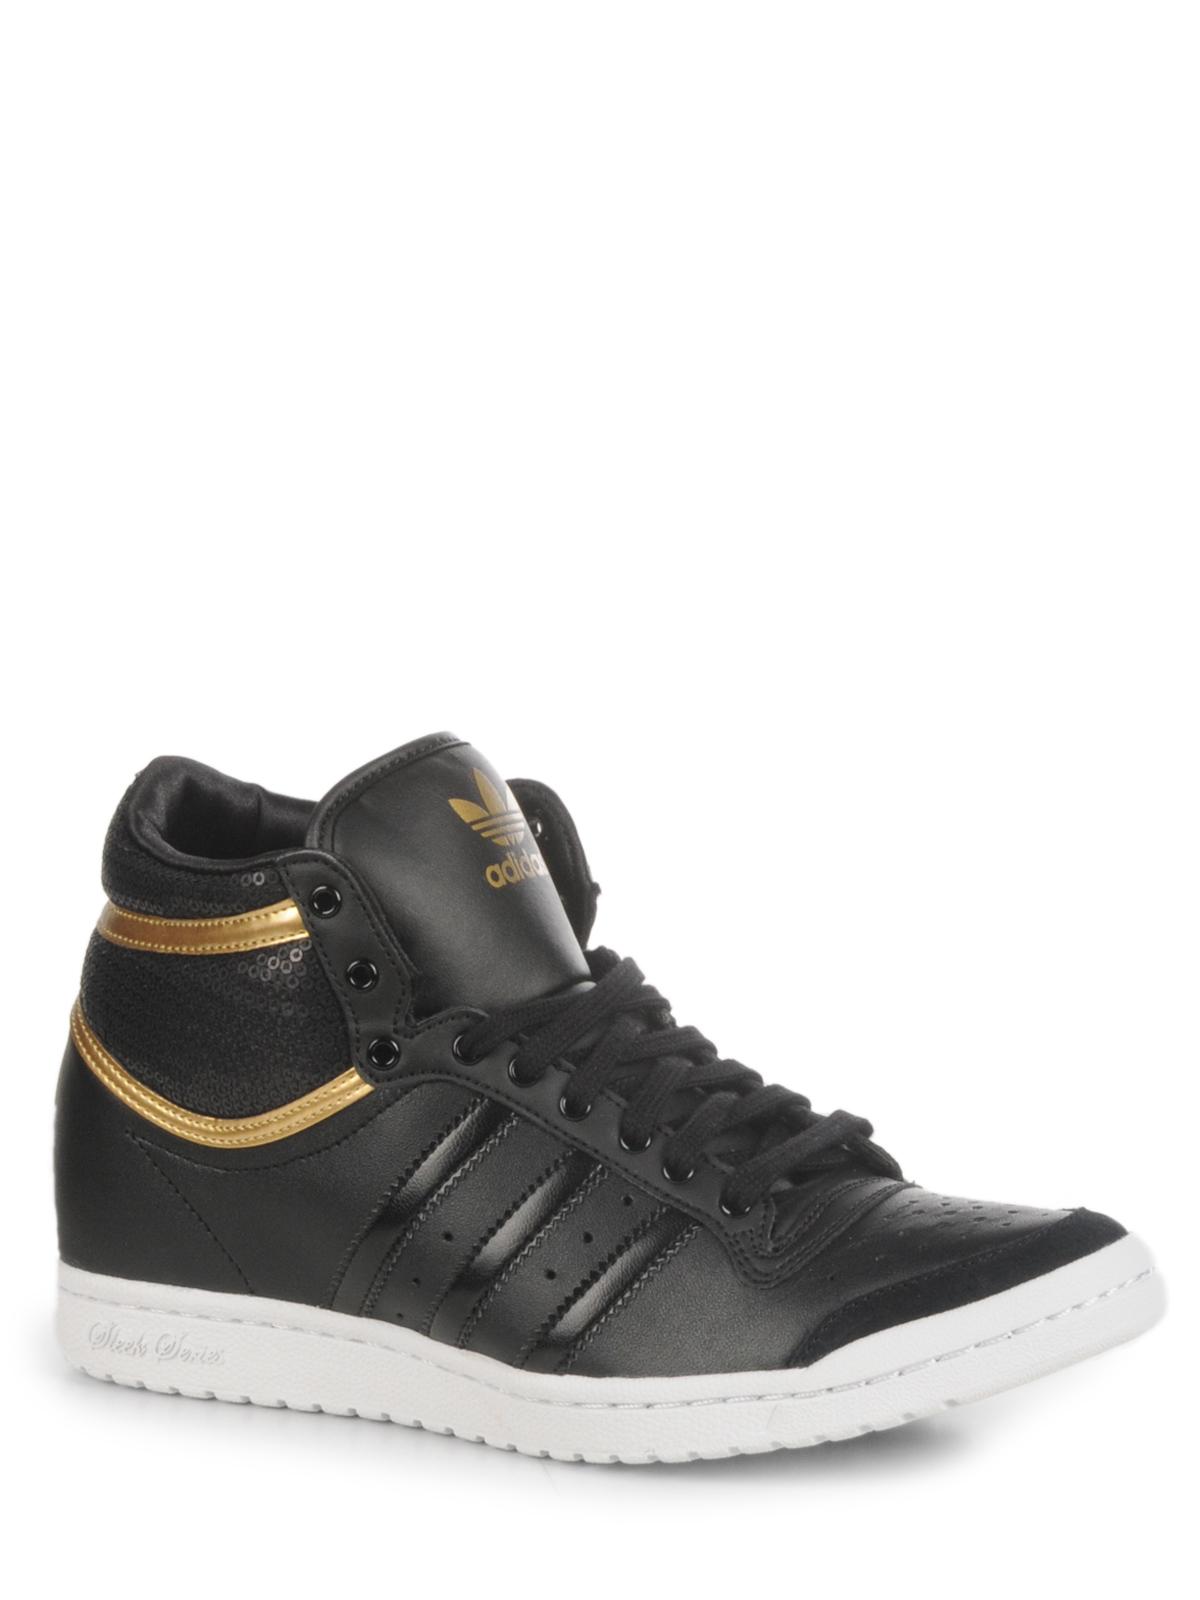 Foto Adidas Top Ten Hi Sleek W deportivas negro/negro/dorado metálico EU: 38